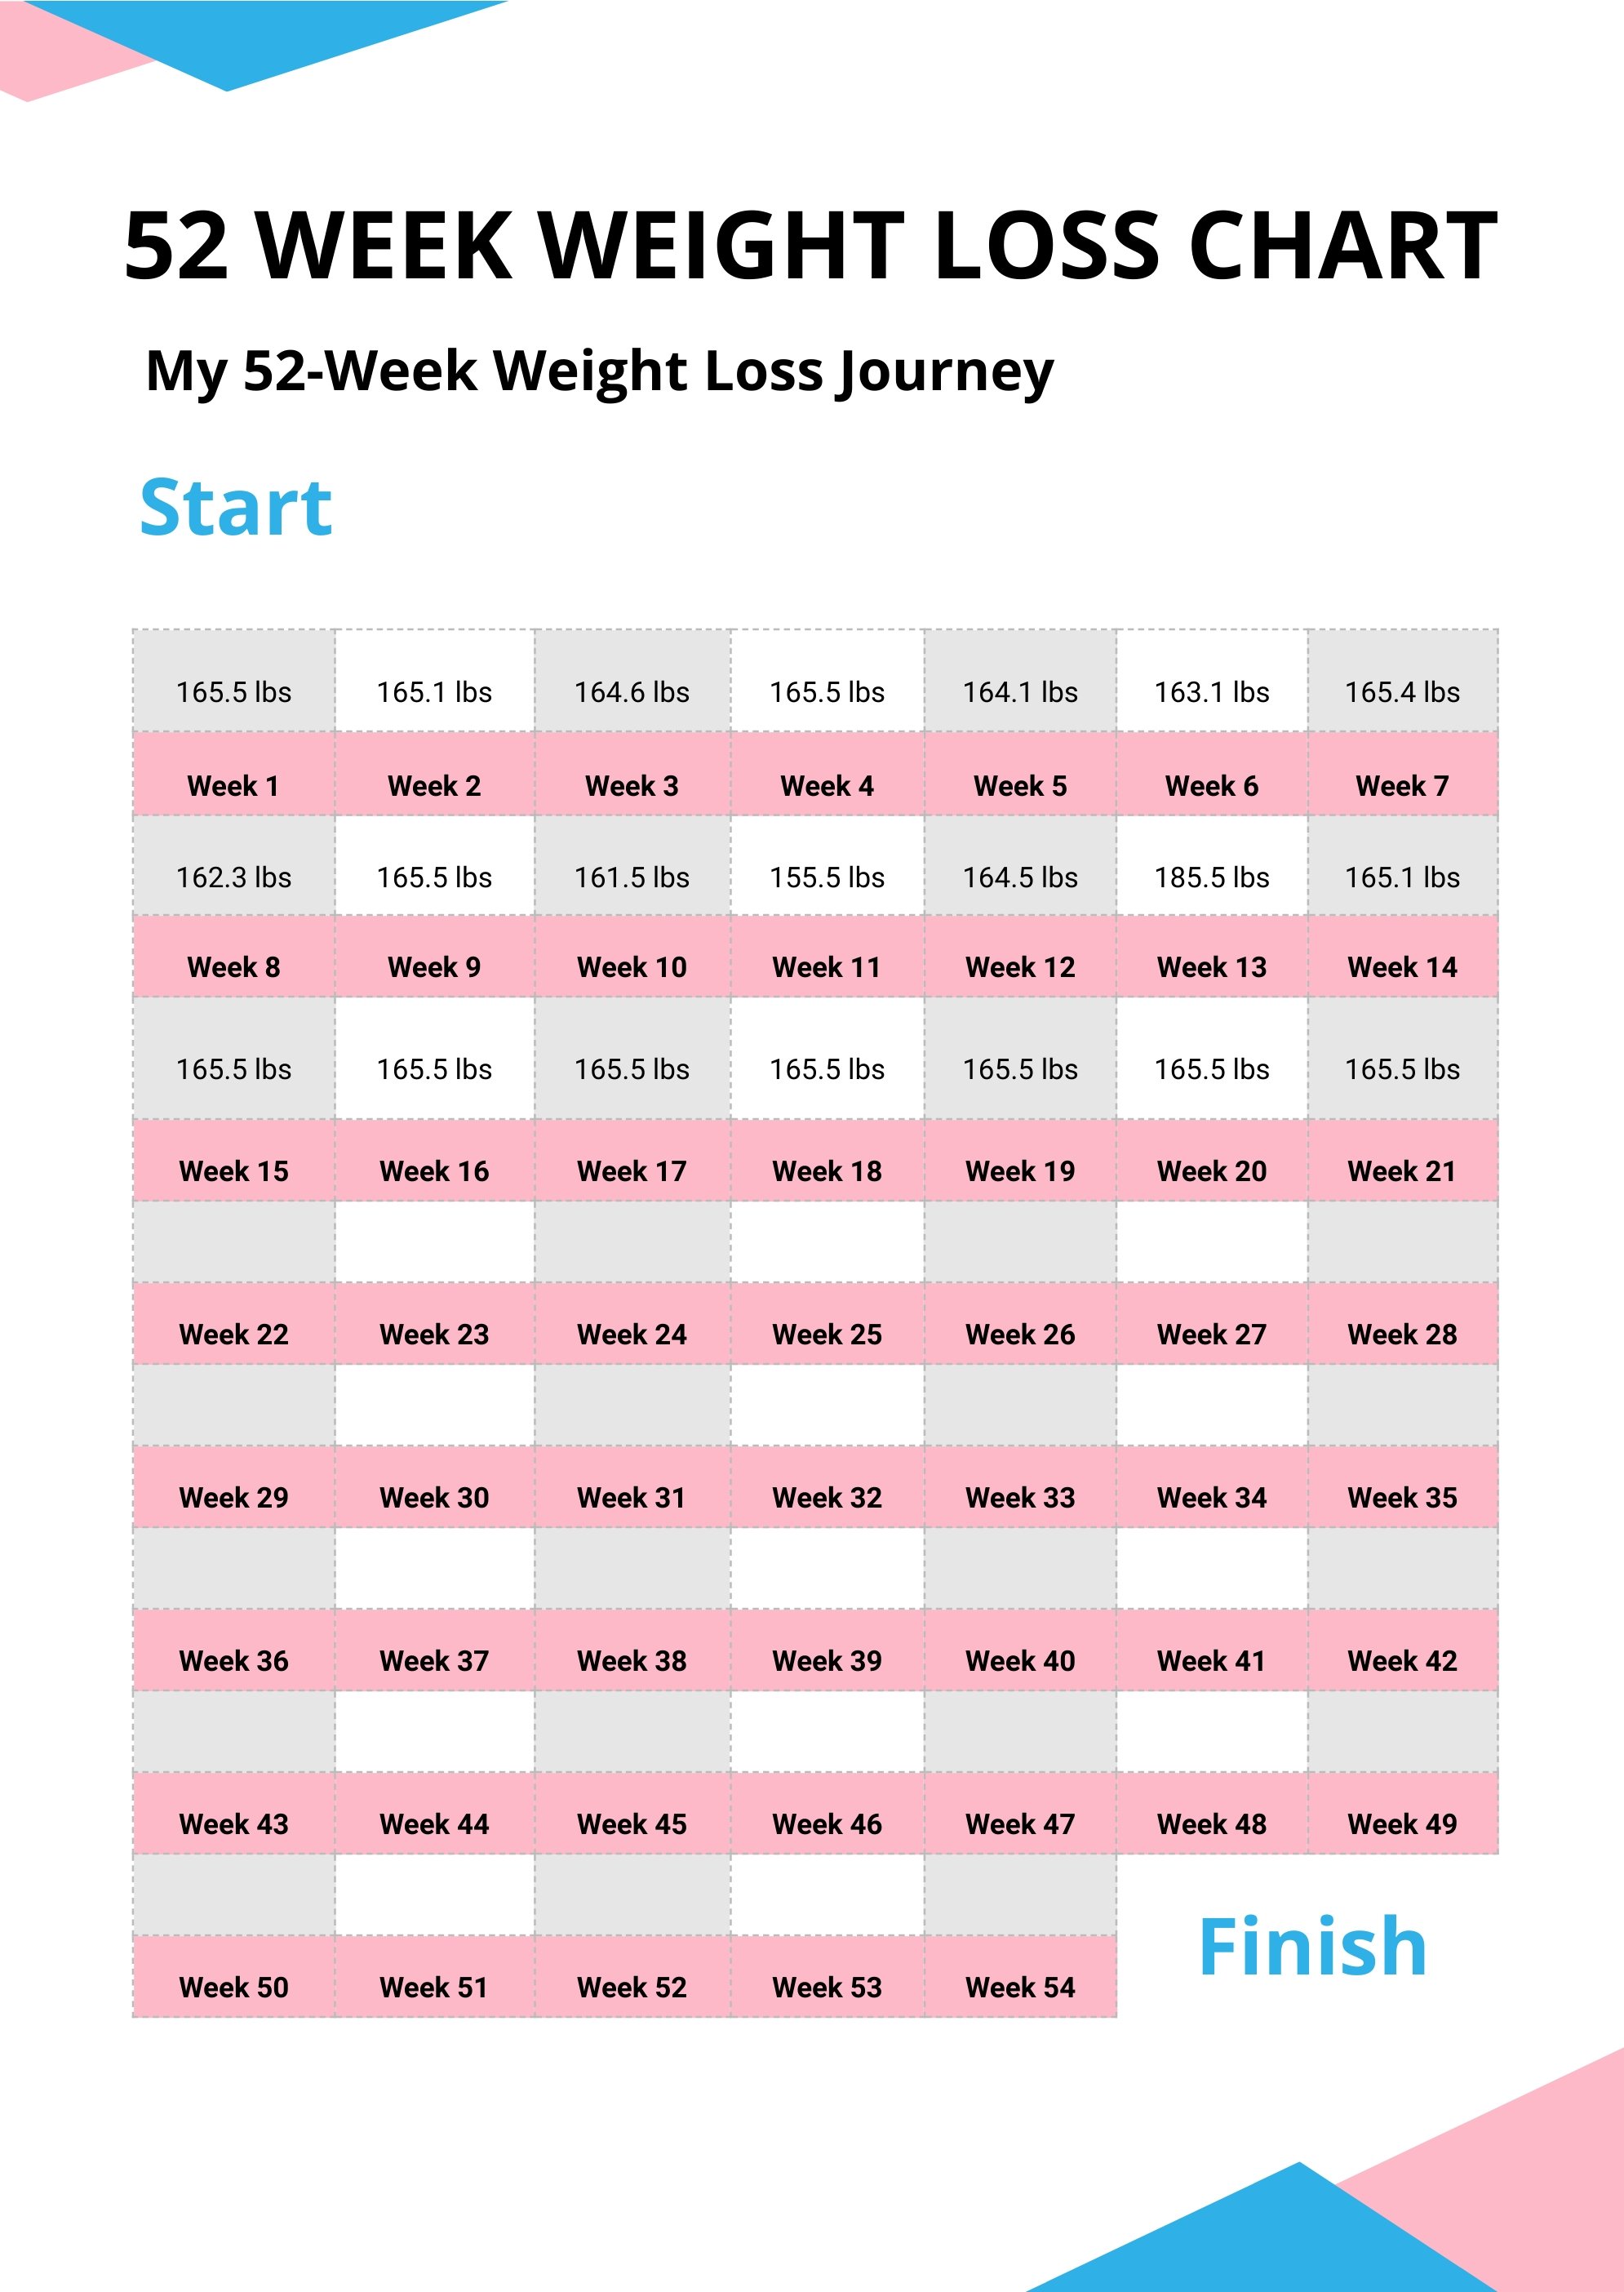 52 Week Weight Loss Chart in PDF, Illustrator